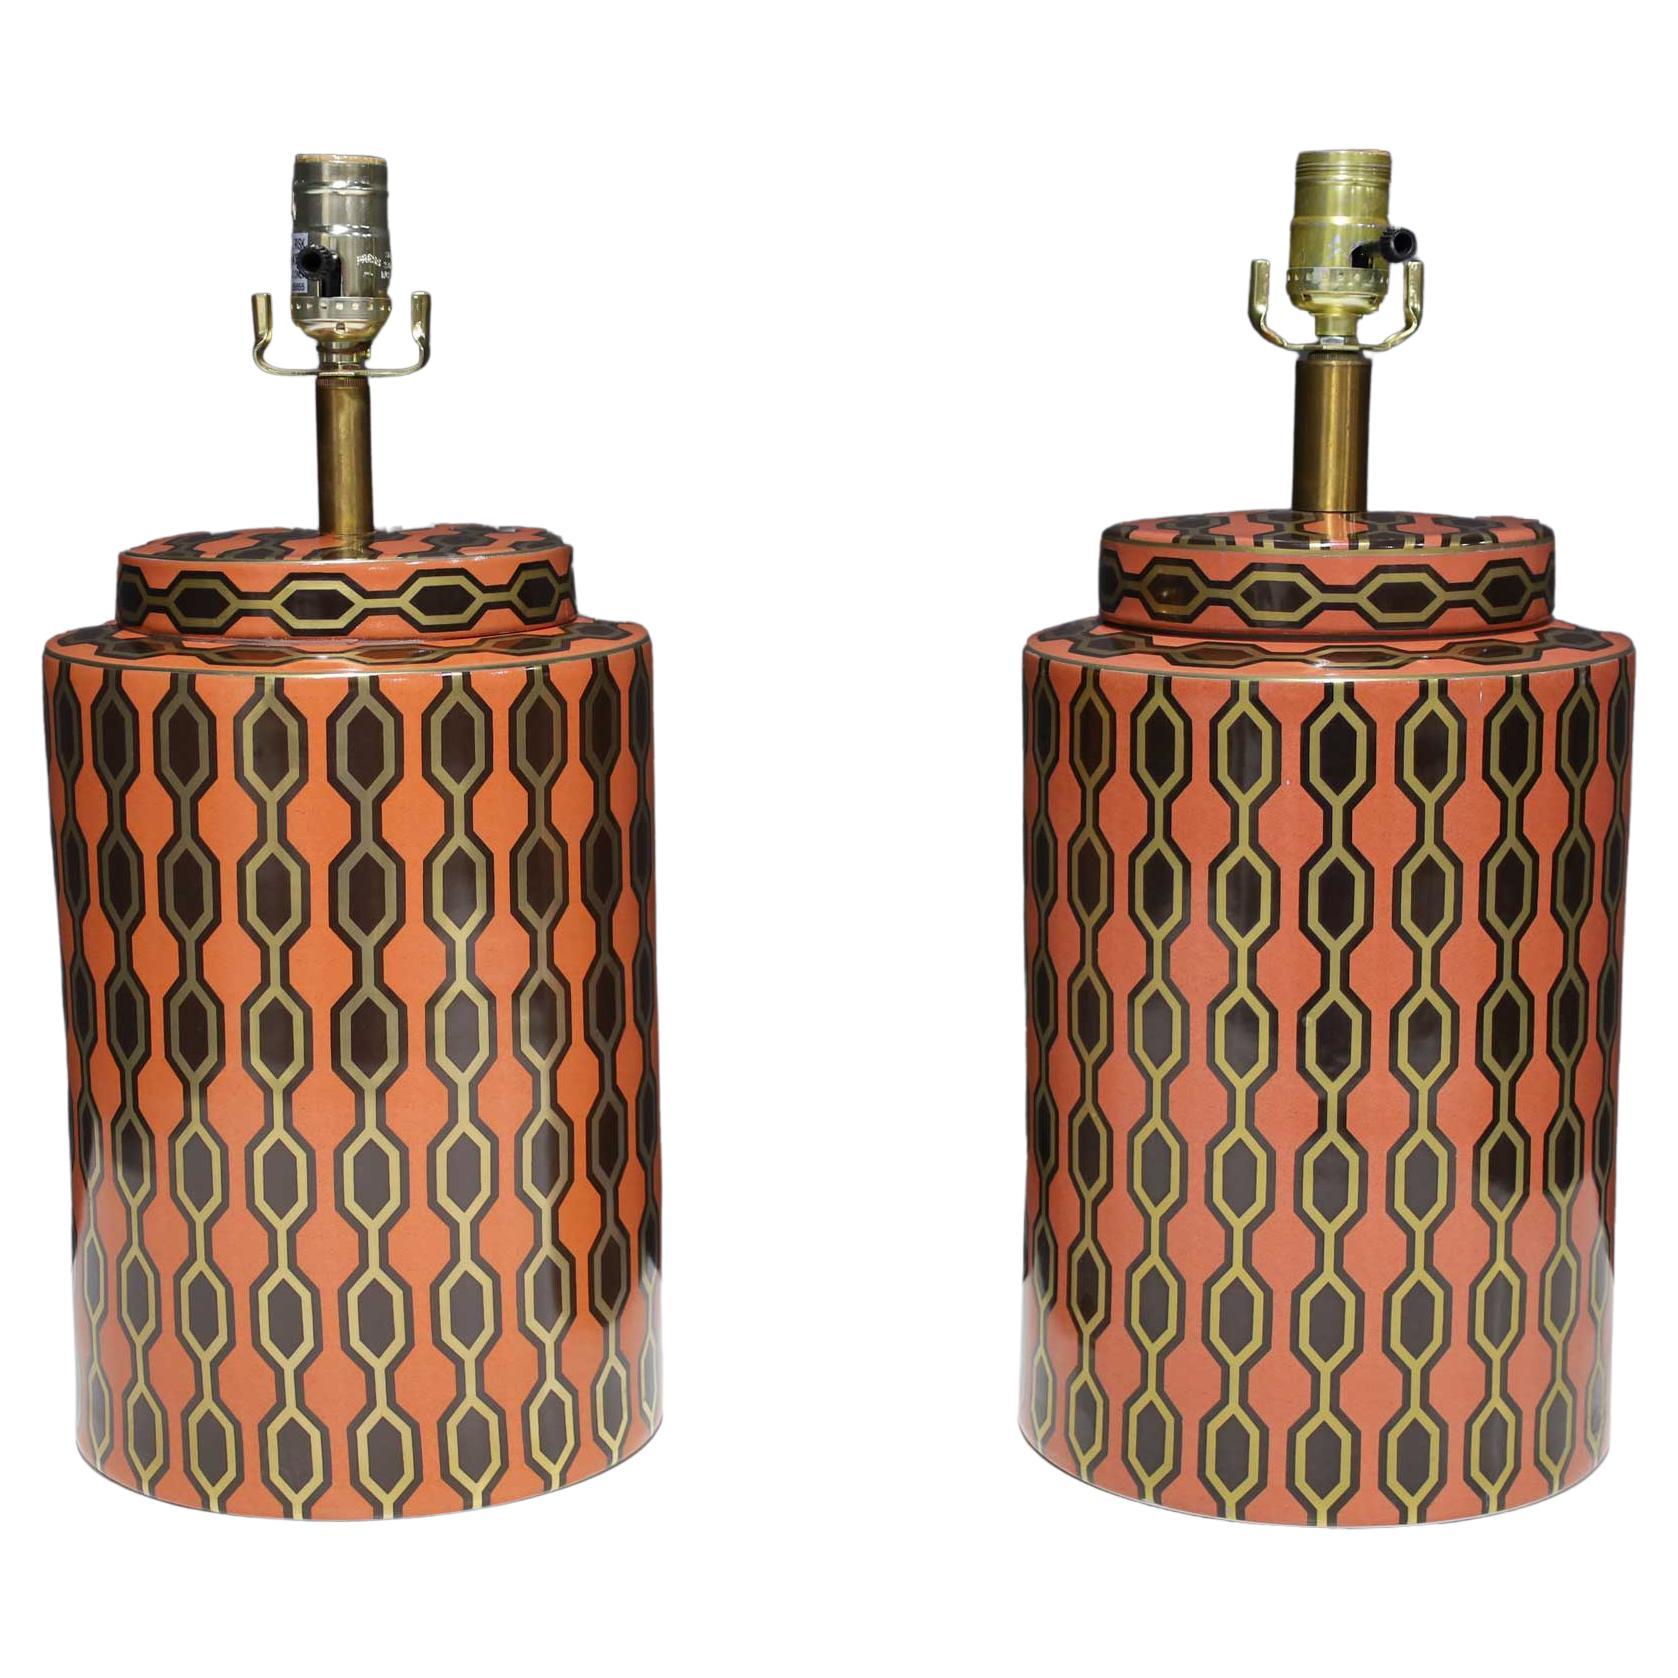 Kelly Hoppen Porcelain Tea Jar Lamps in Orange, Gold and Brown Geometric Pattern